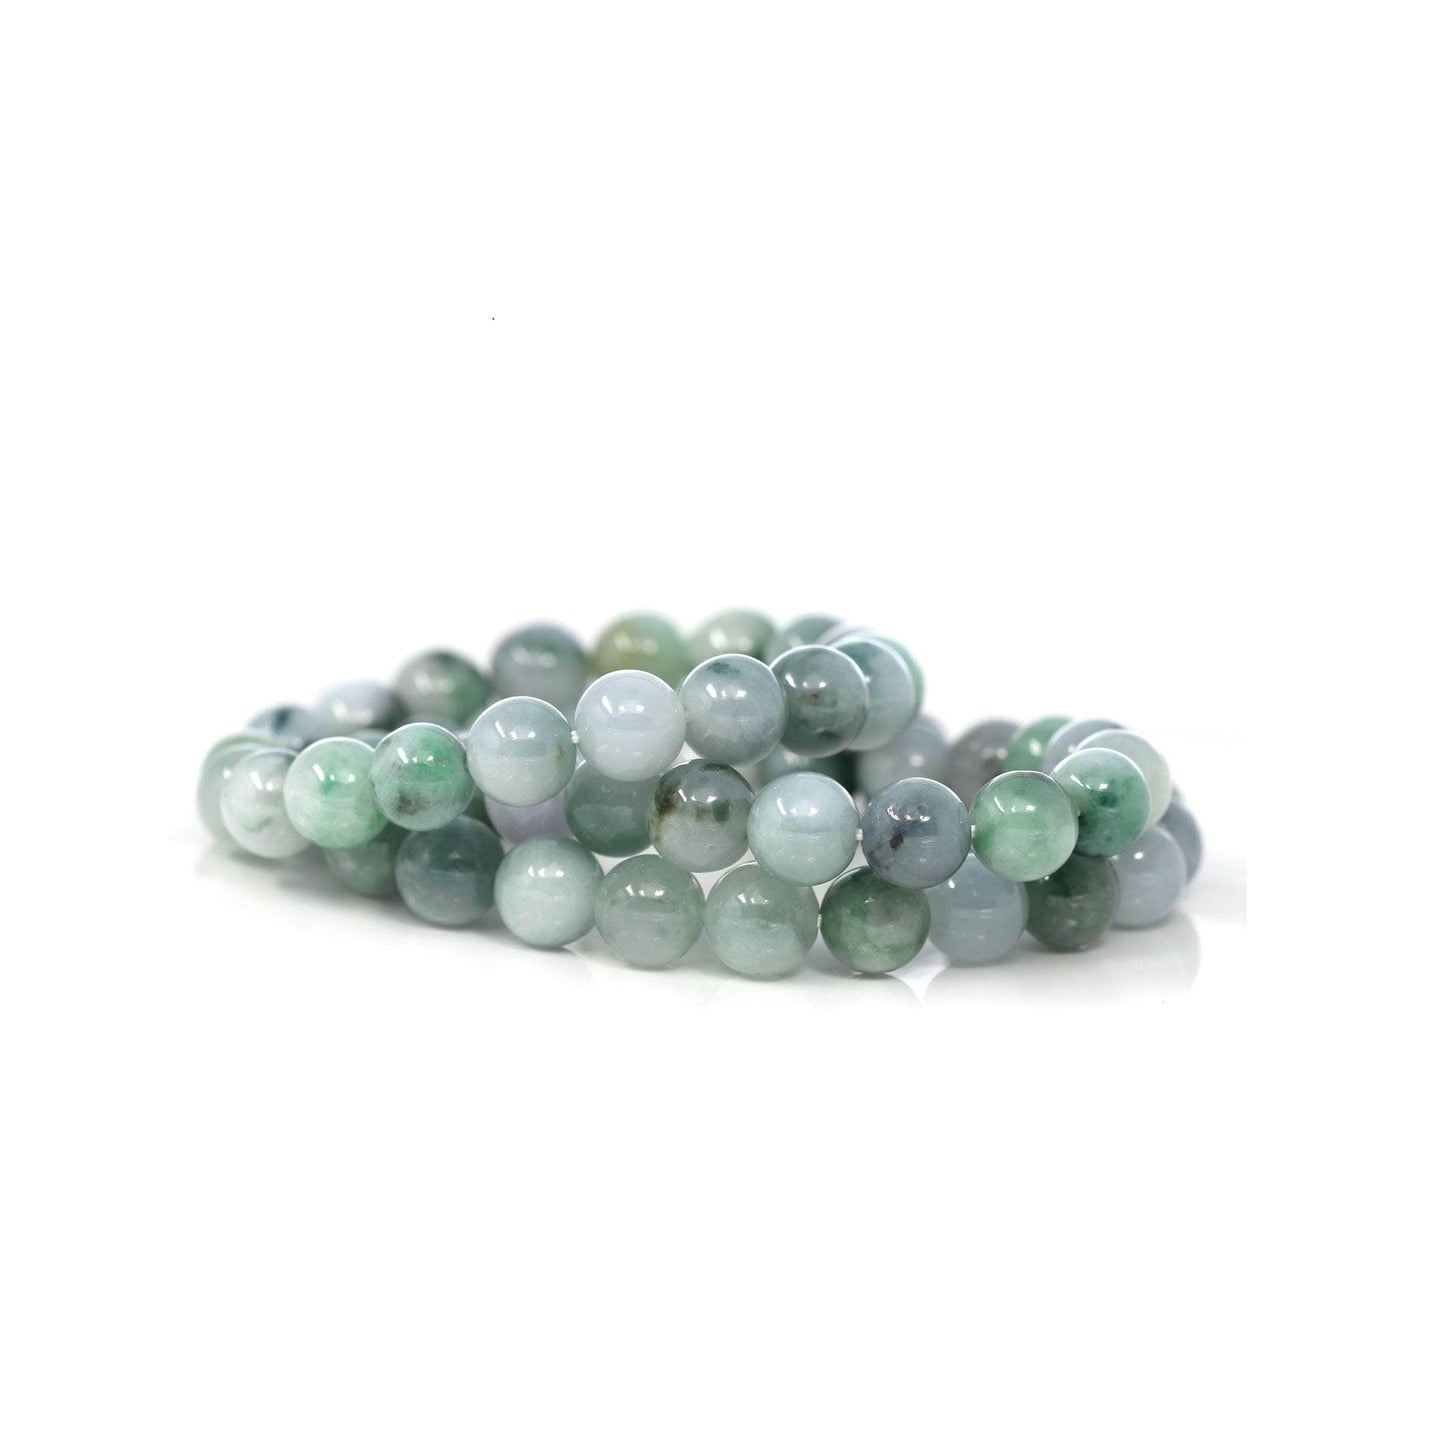 Load image into Gallery viewer, Genuine Jadeite Jade 10mm Round Blue Green Multiple Color Beads Bracelet (10mm)
